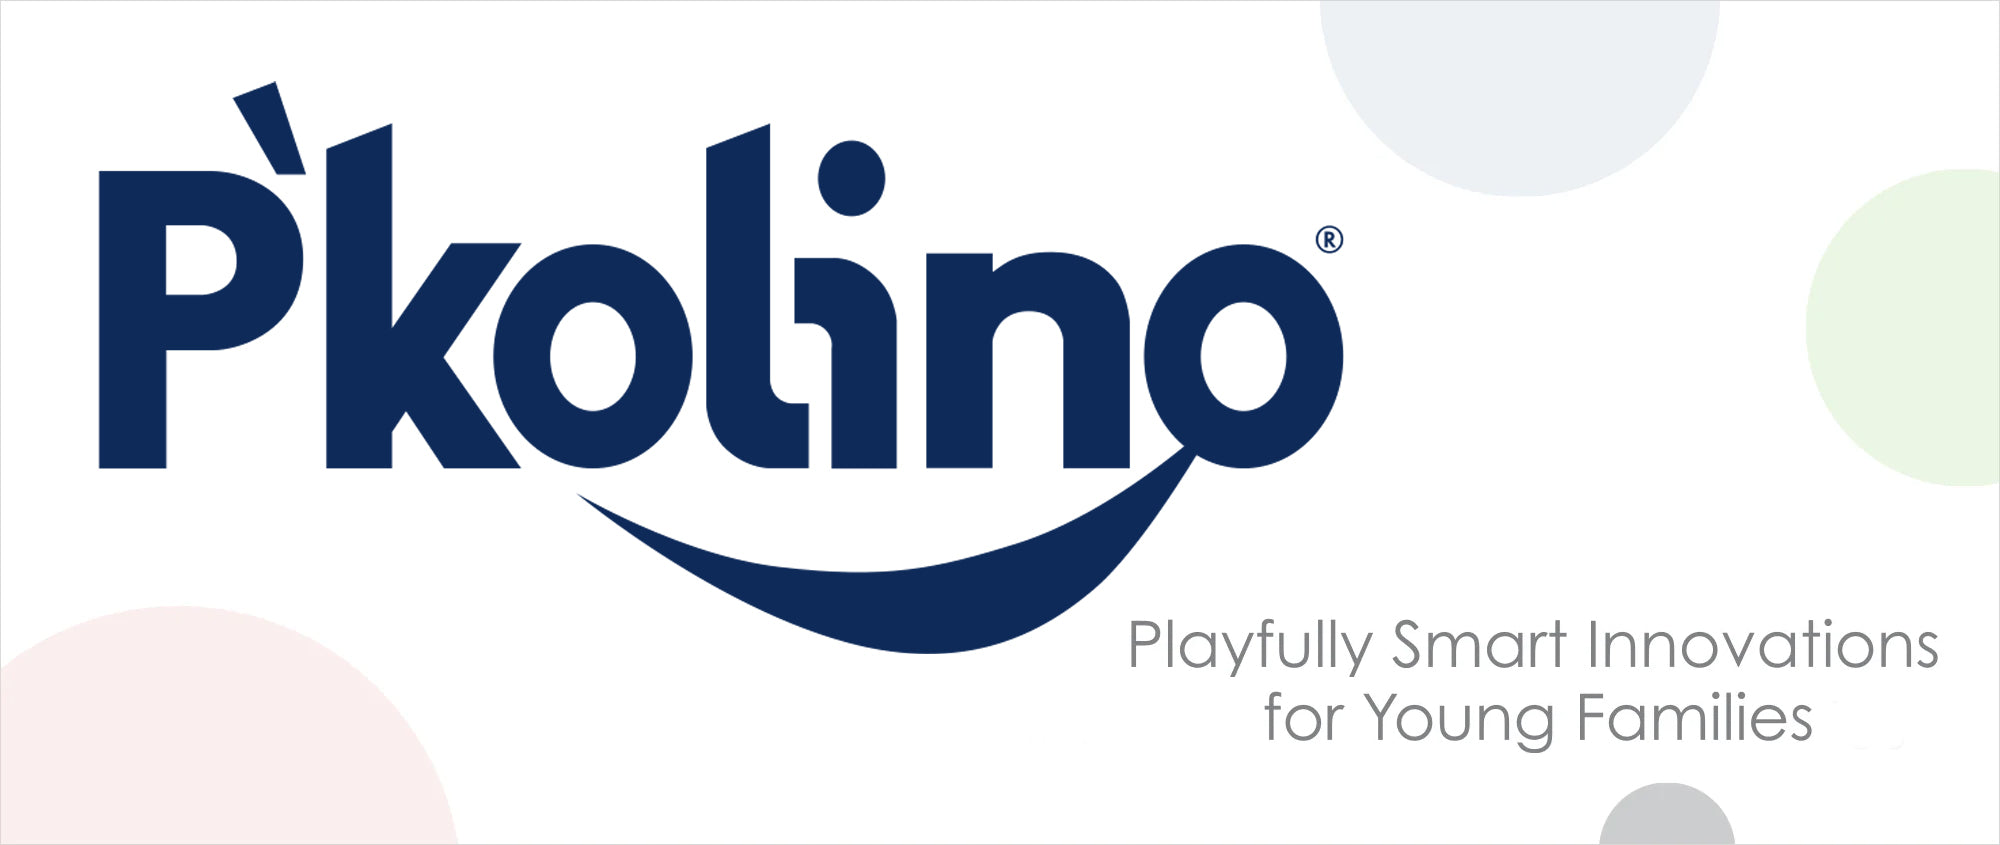 P'kolino Logo